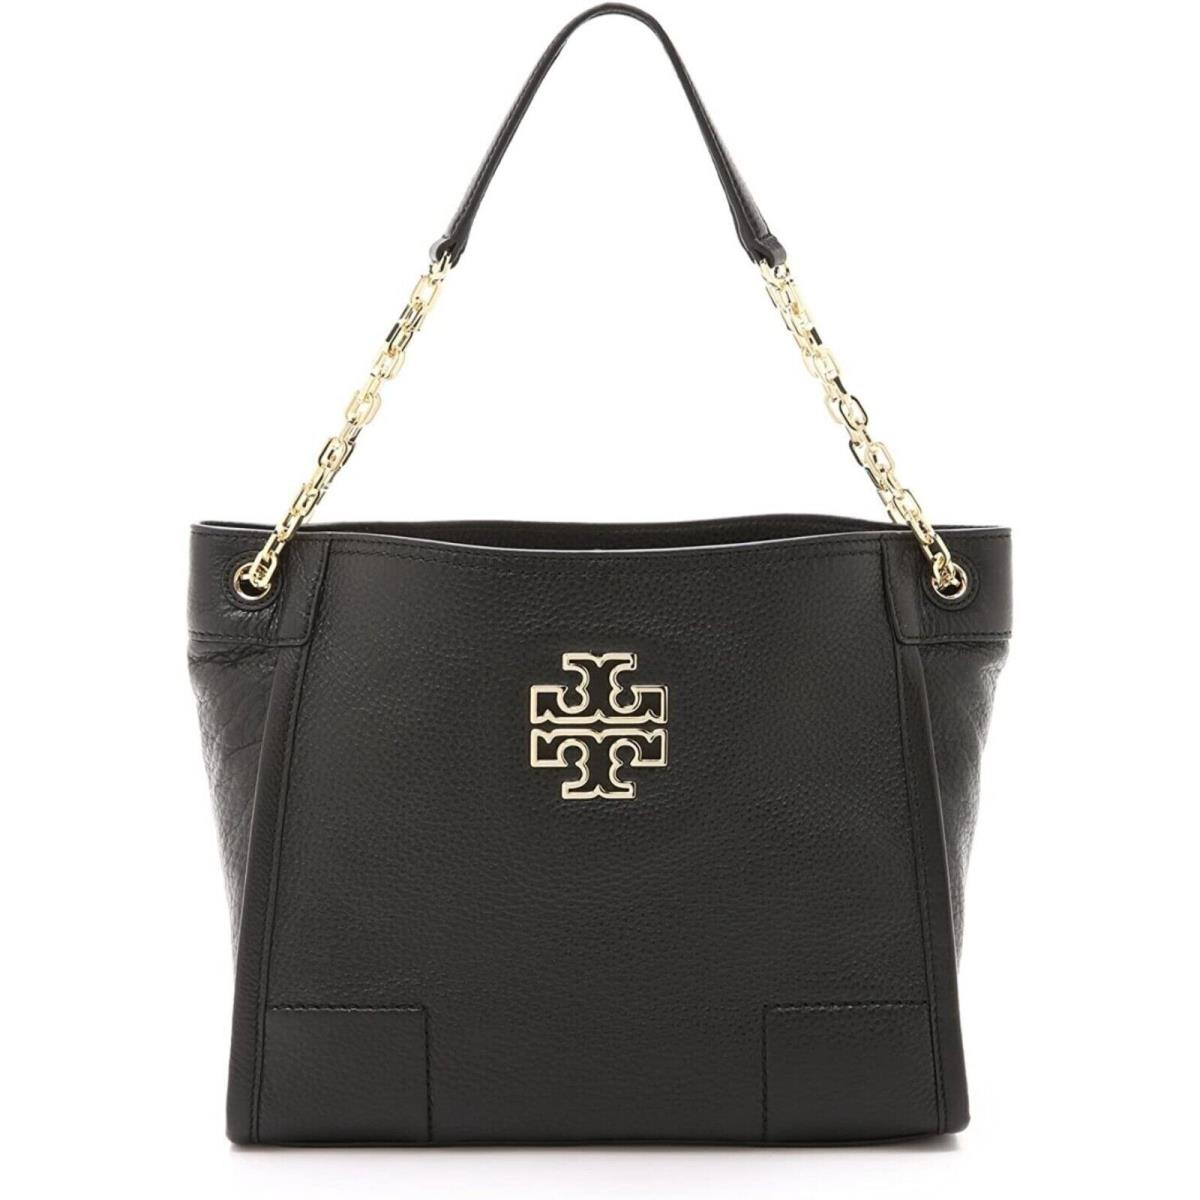 Tory Burch Small Britten Leather Tote Black Handbag Shoulder Bag - Gold Handle/Strap, Gold Hardware, Black Exterior